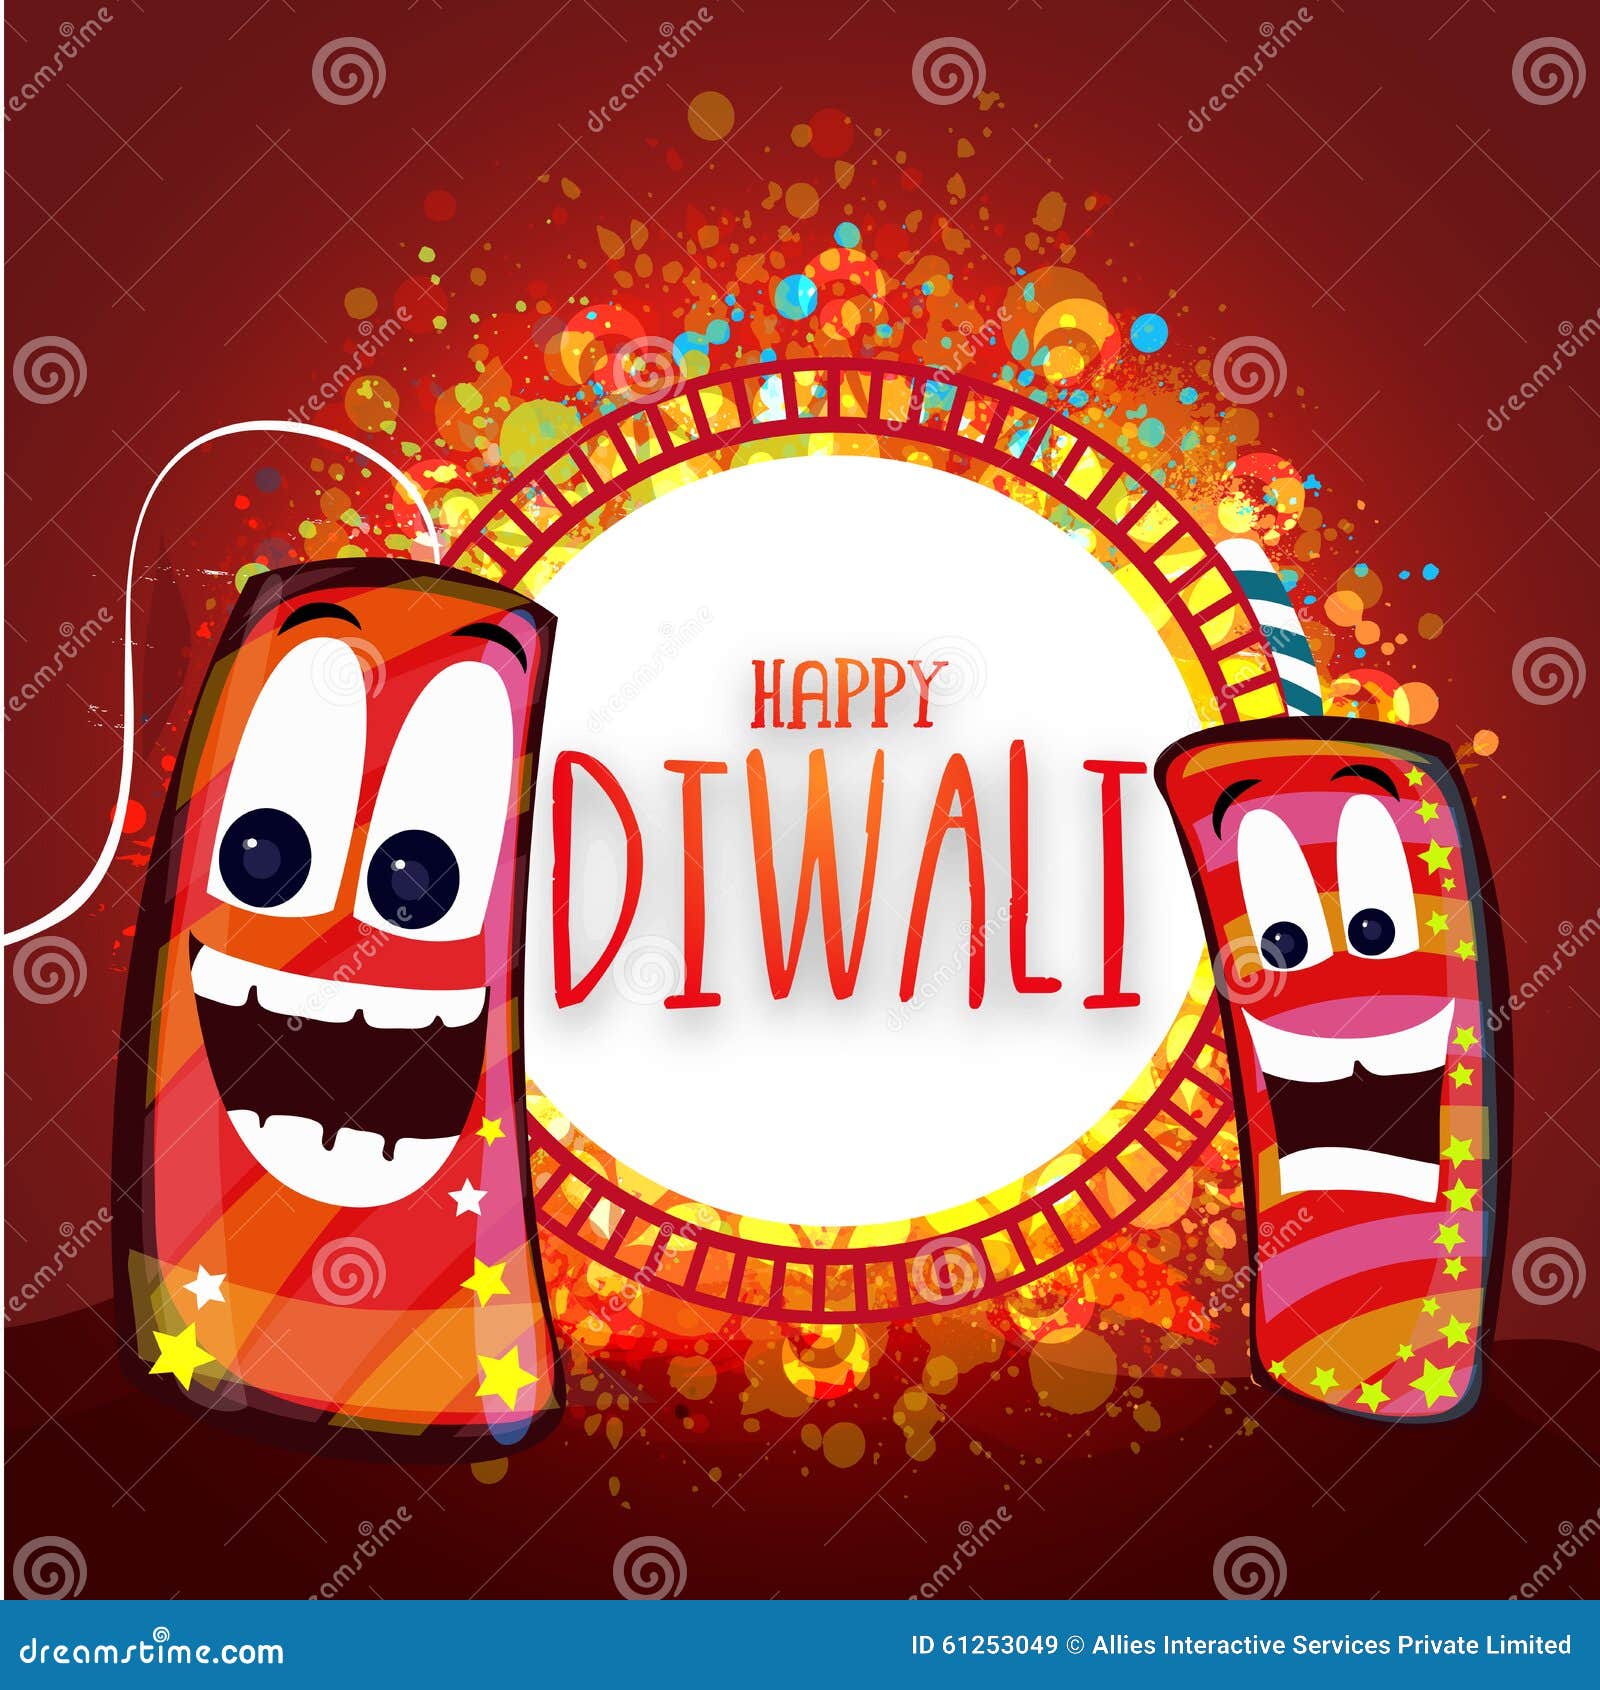 Happy Diwali Celebration with Firecrackers. Stock Illustration ...